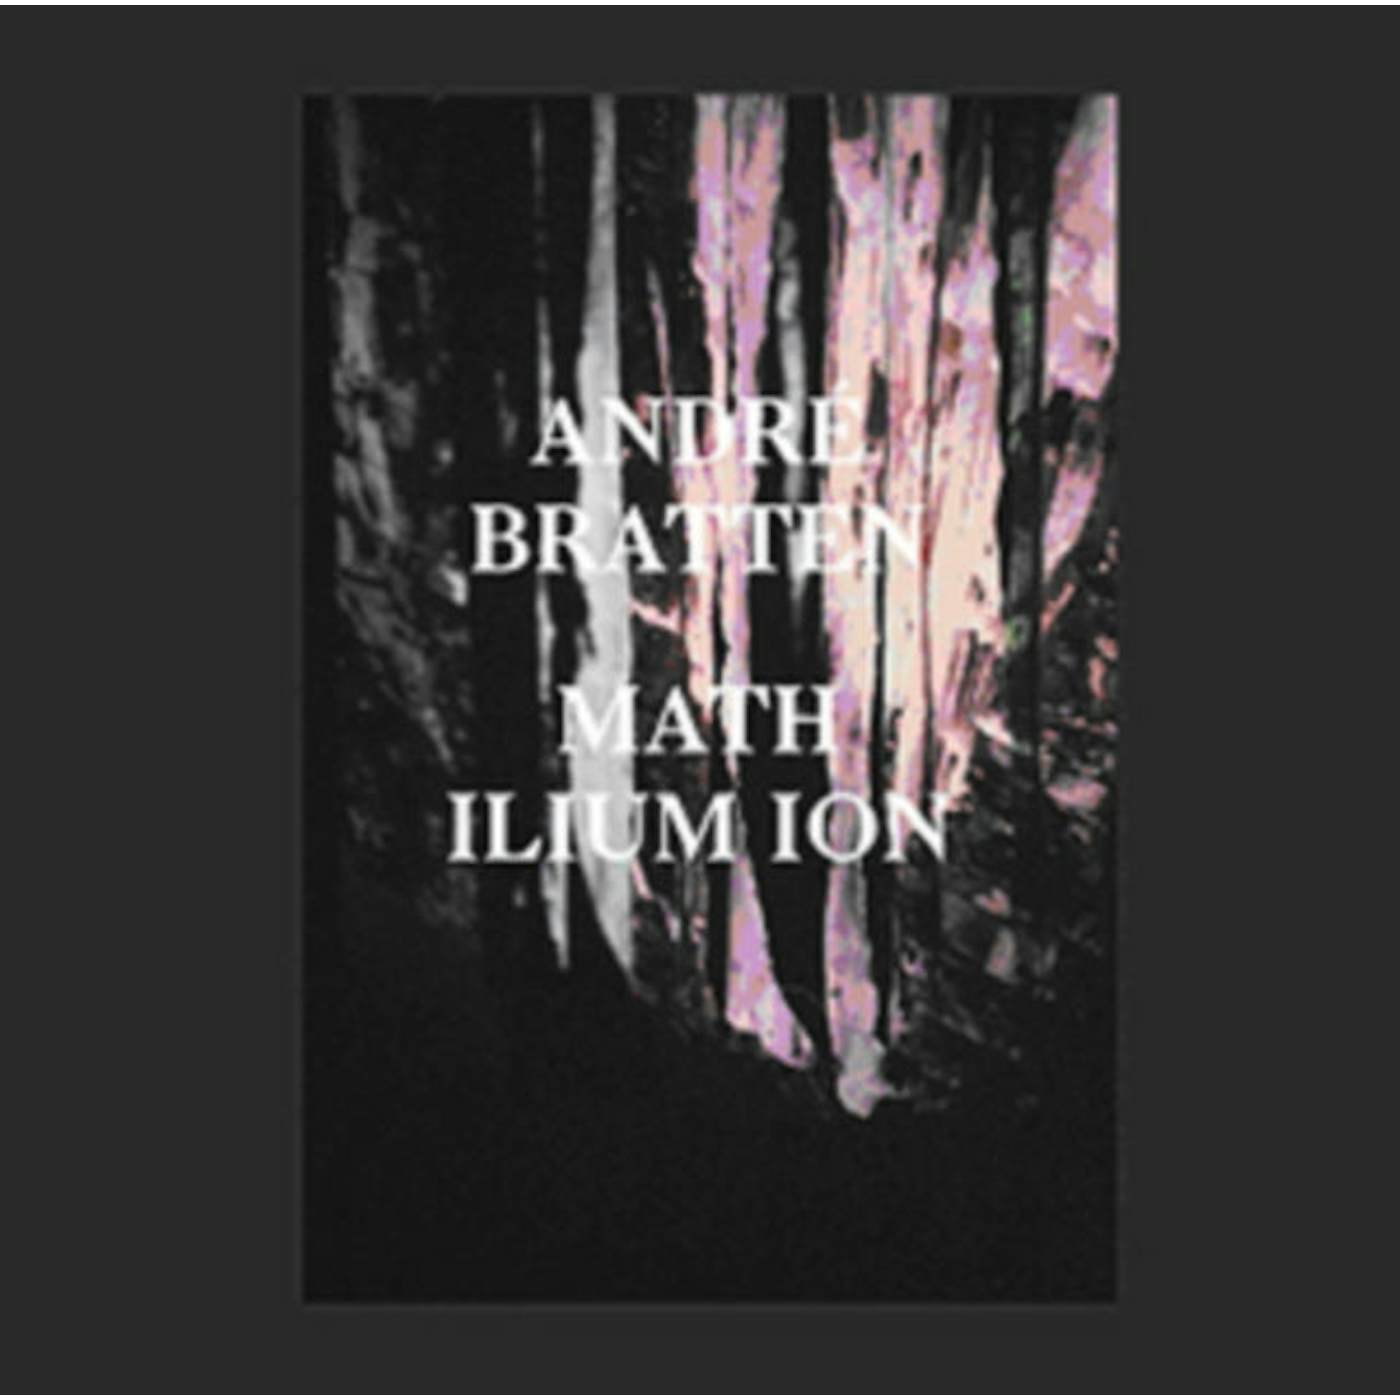 André Bratten LP Vinyl Record - Math Ilium Ion